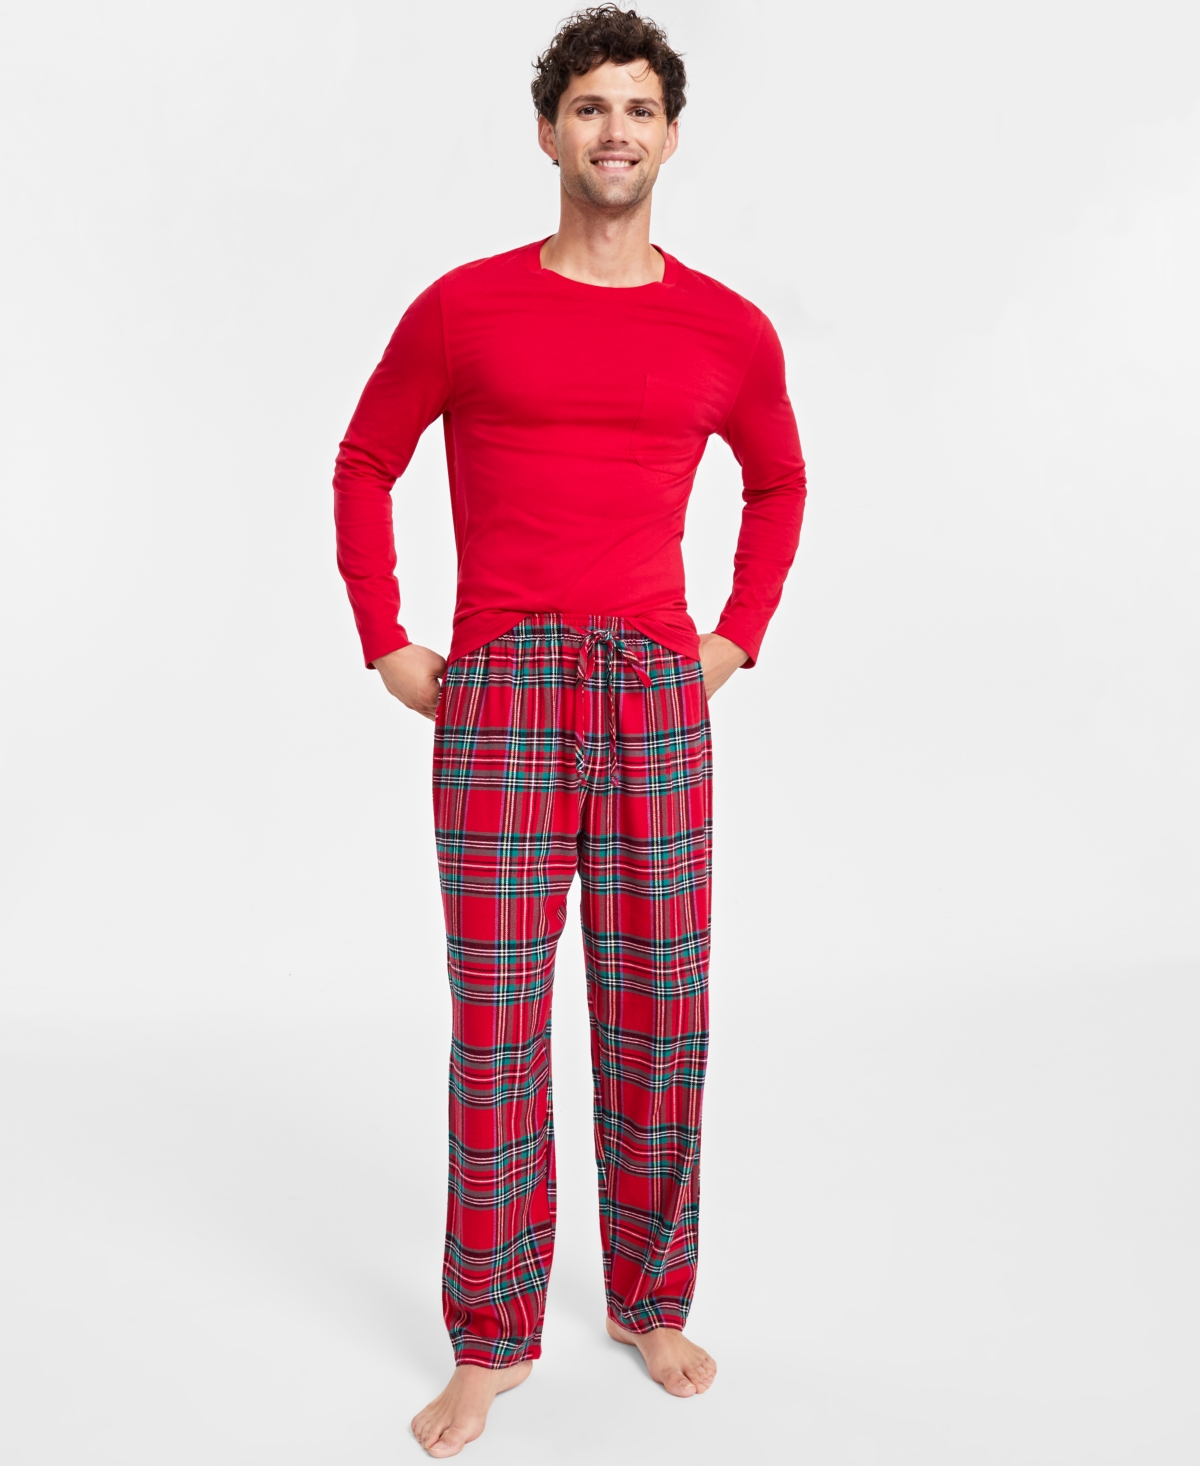 Matching Family Pajamas Men's Mix It Brinkley Pajamas Set, Created for Macy's - Brinkley Plaid